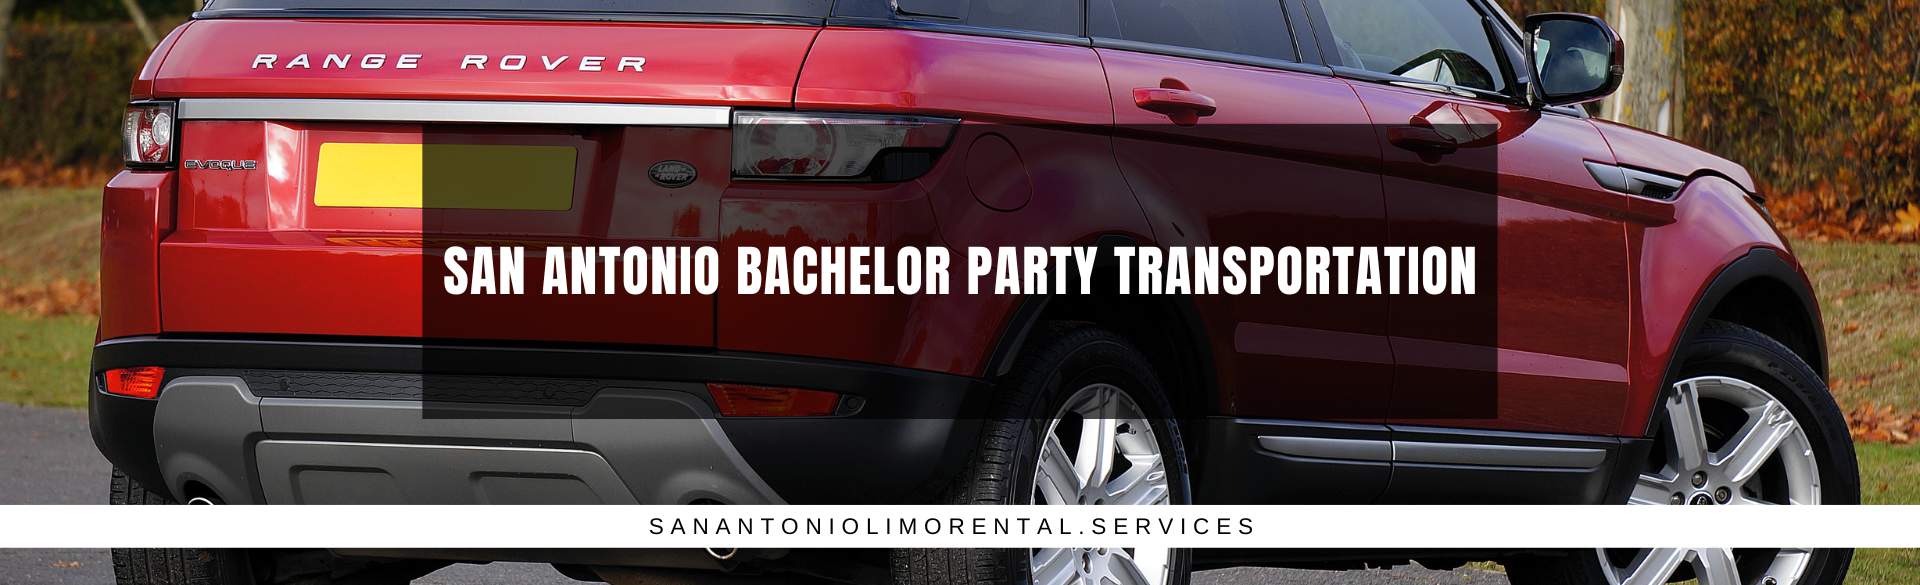 San Antonio Bachelor Party Transportation